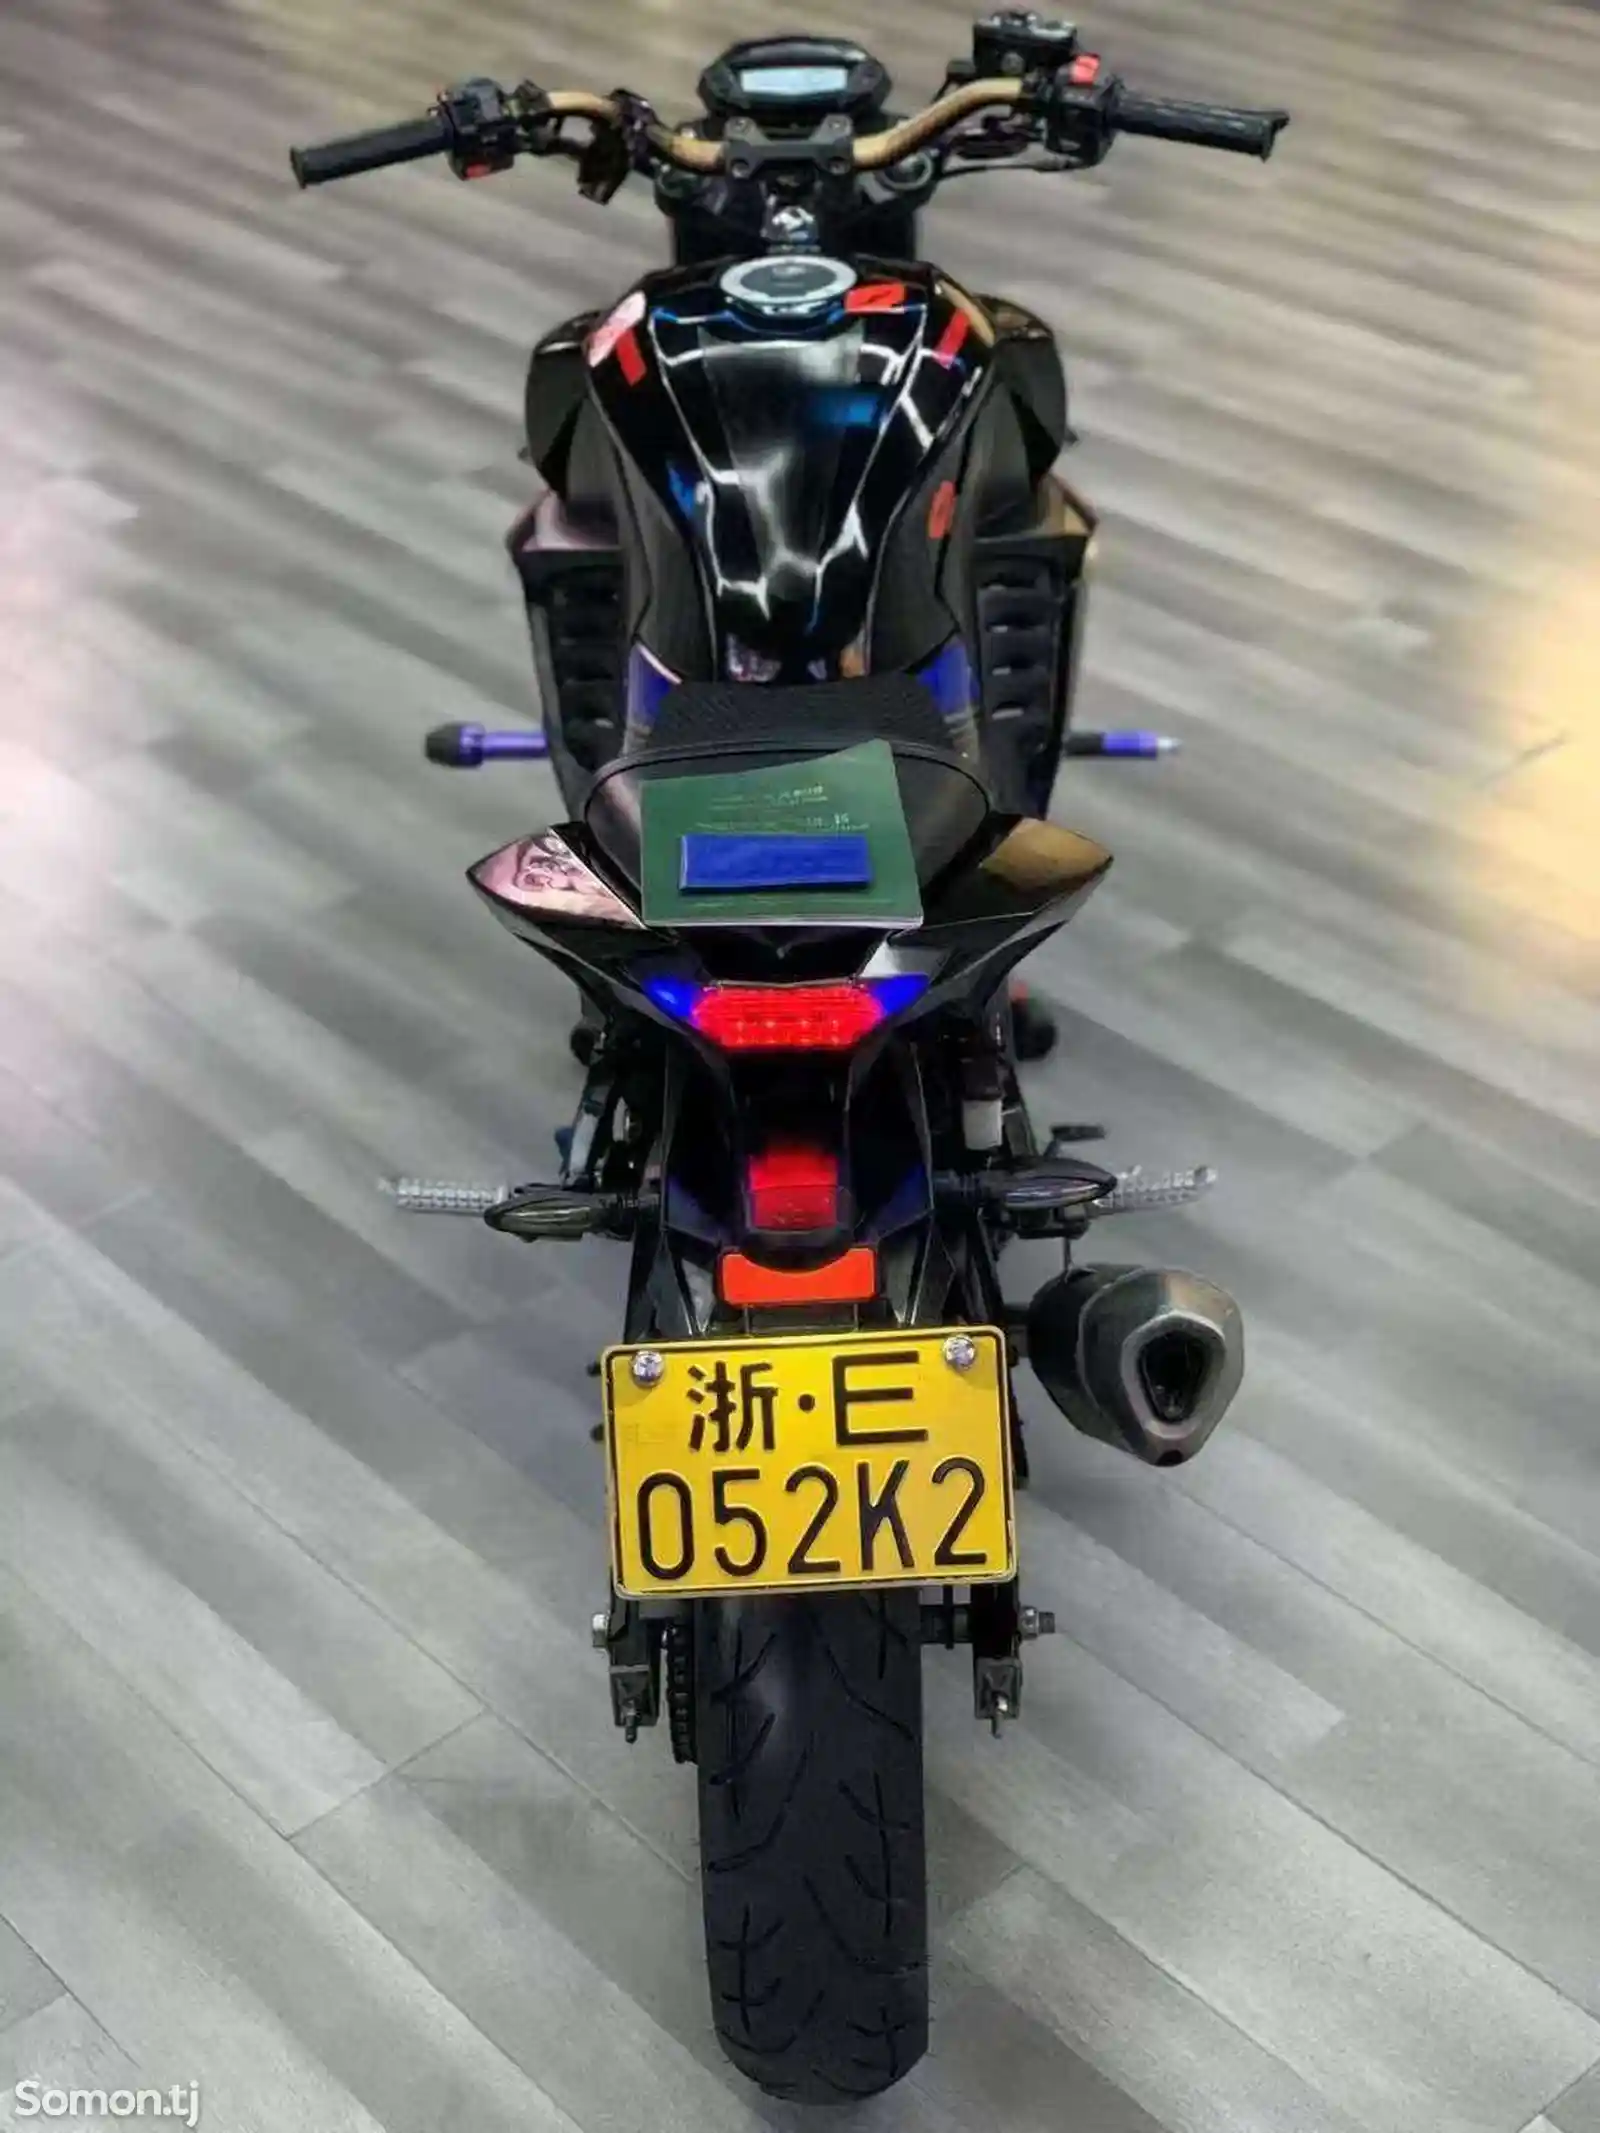 Мотоцикл Kawasaki XF 200cc на заказ-8